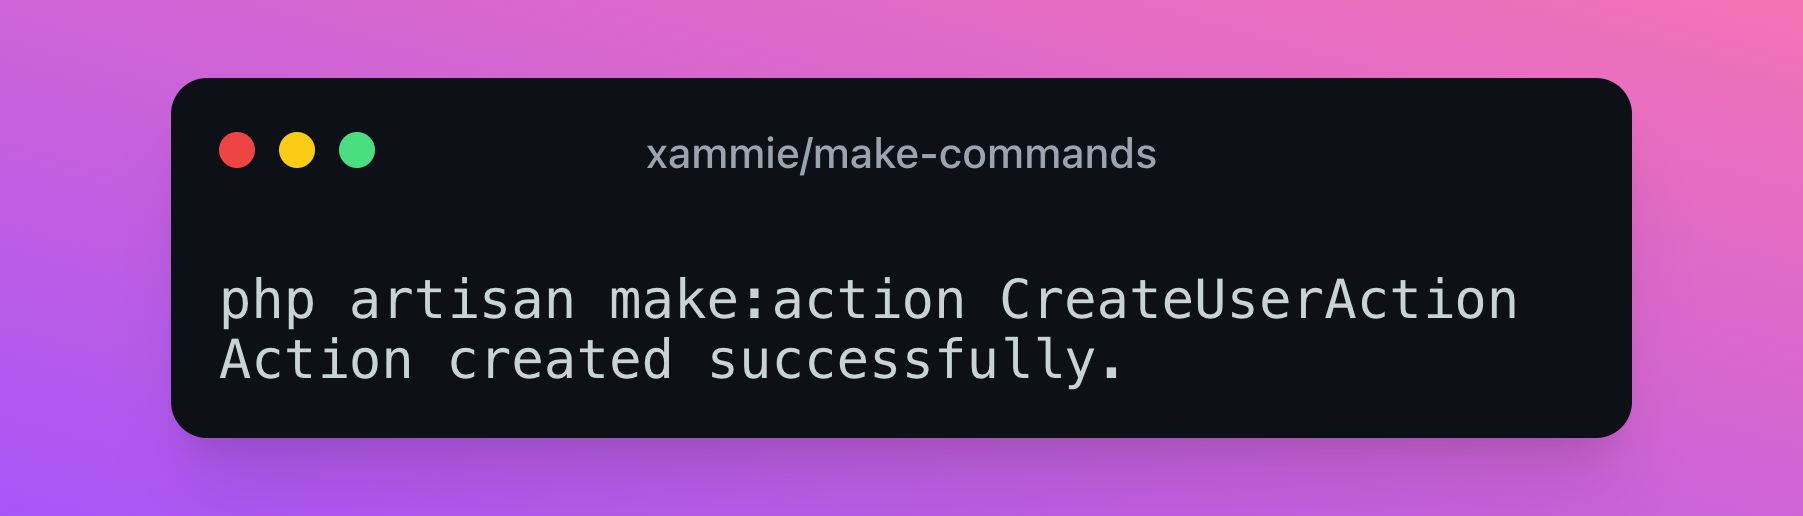 xammie/make-commands